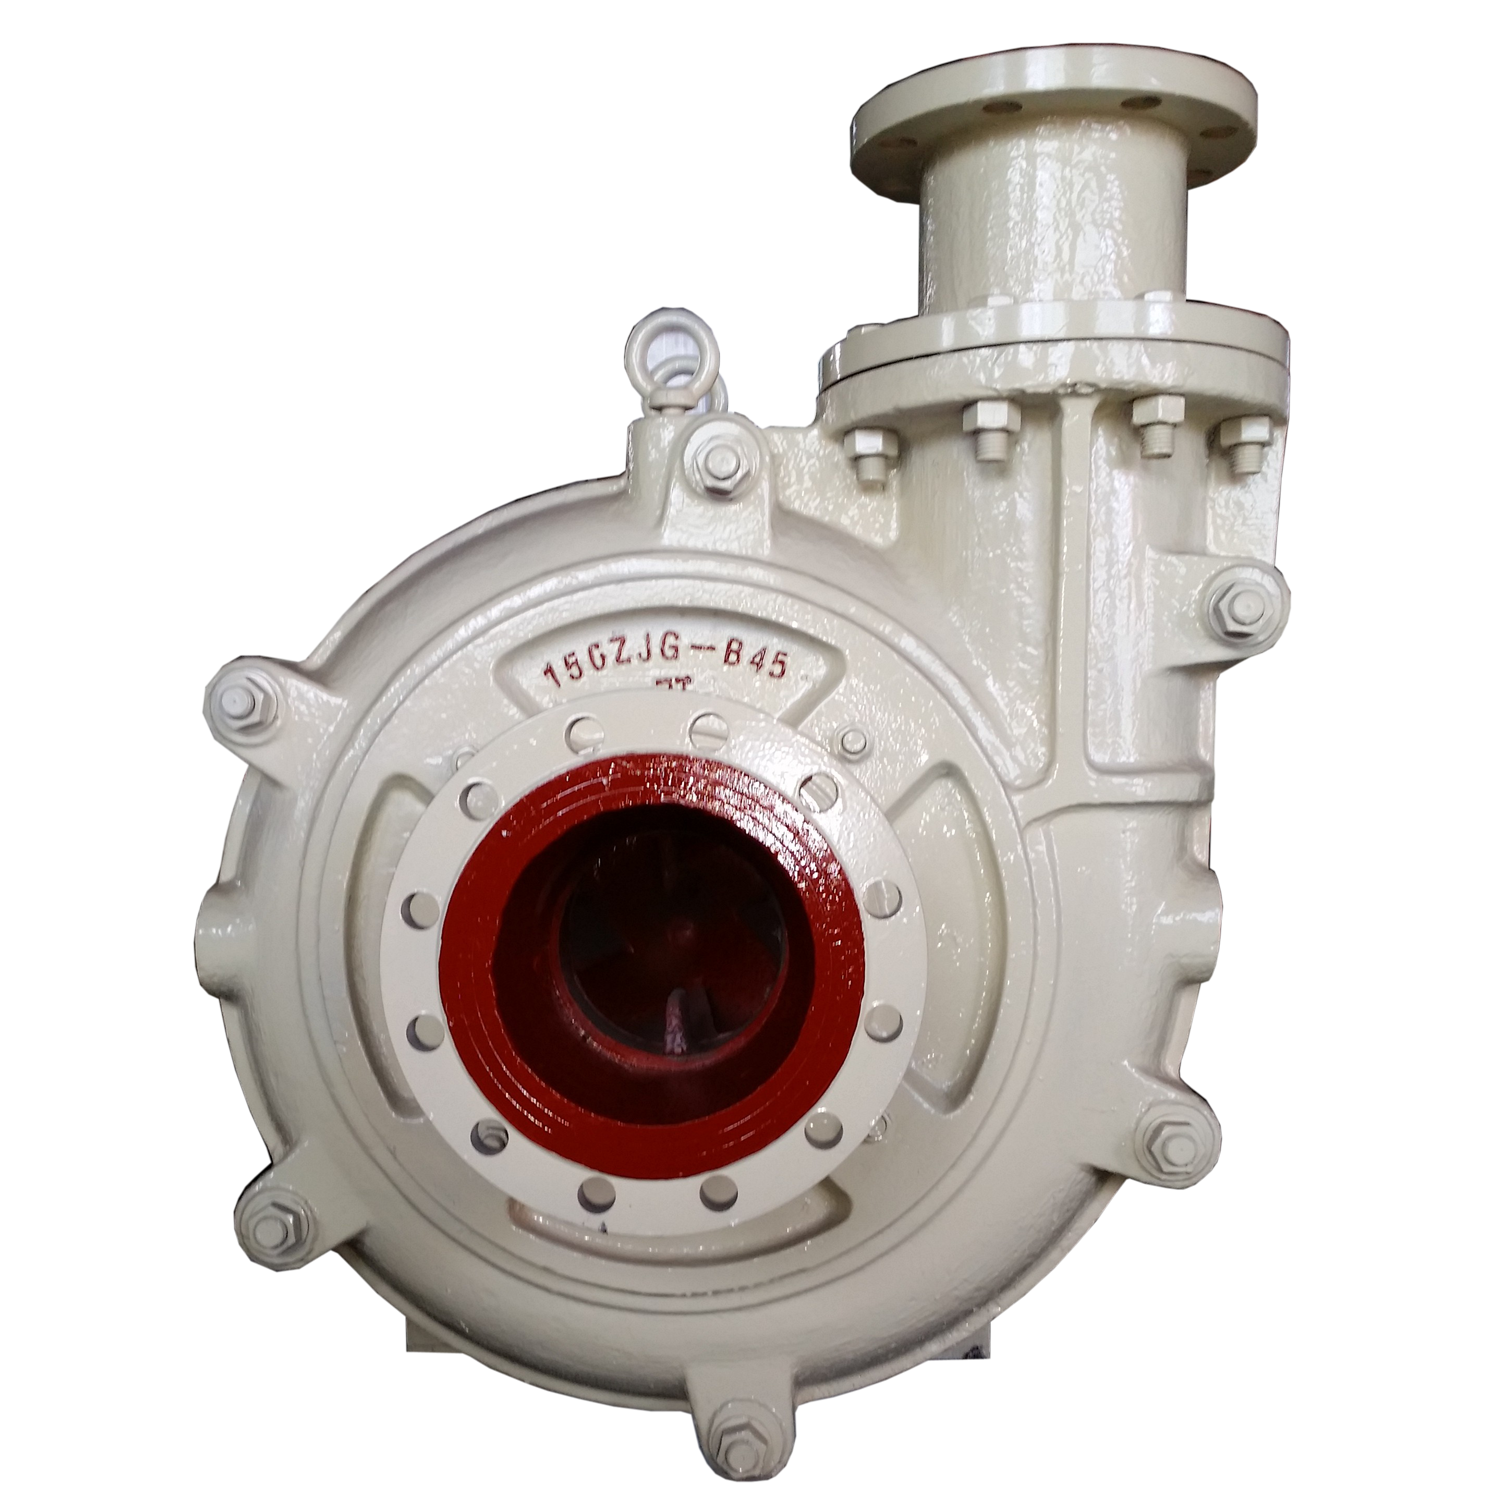 150ZJ-A50 horizontal slurry pombi centrifugal